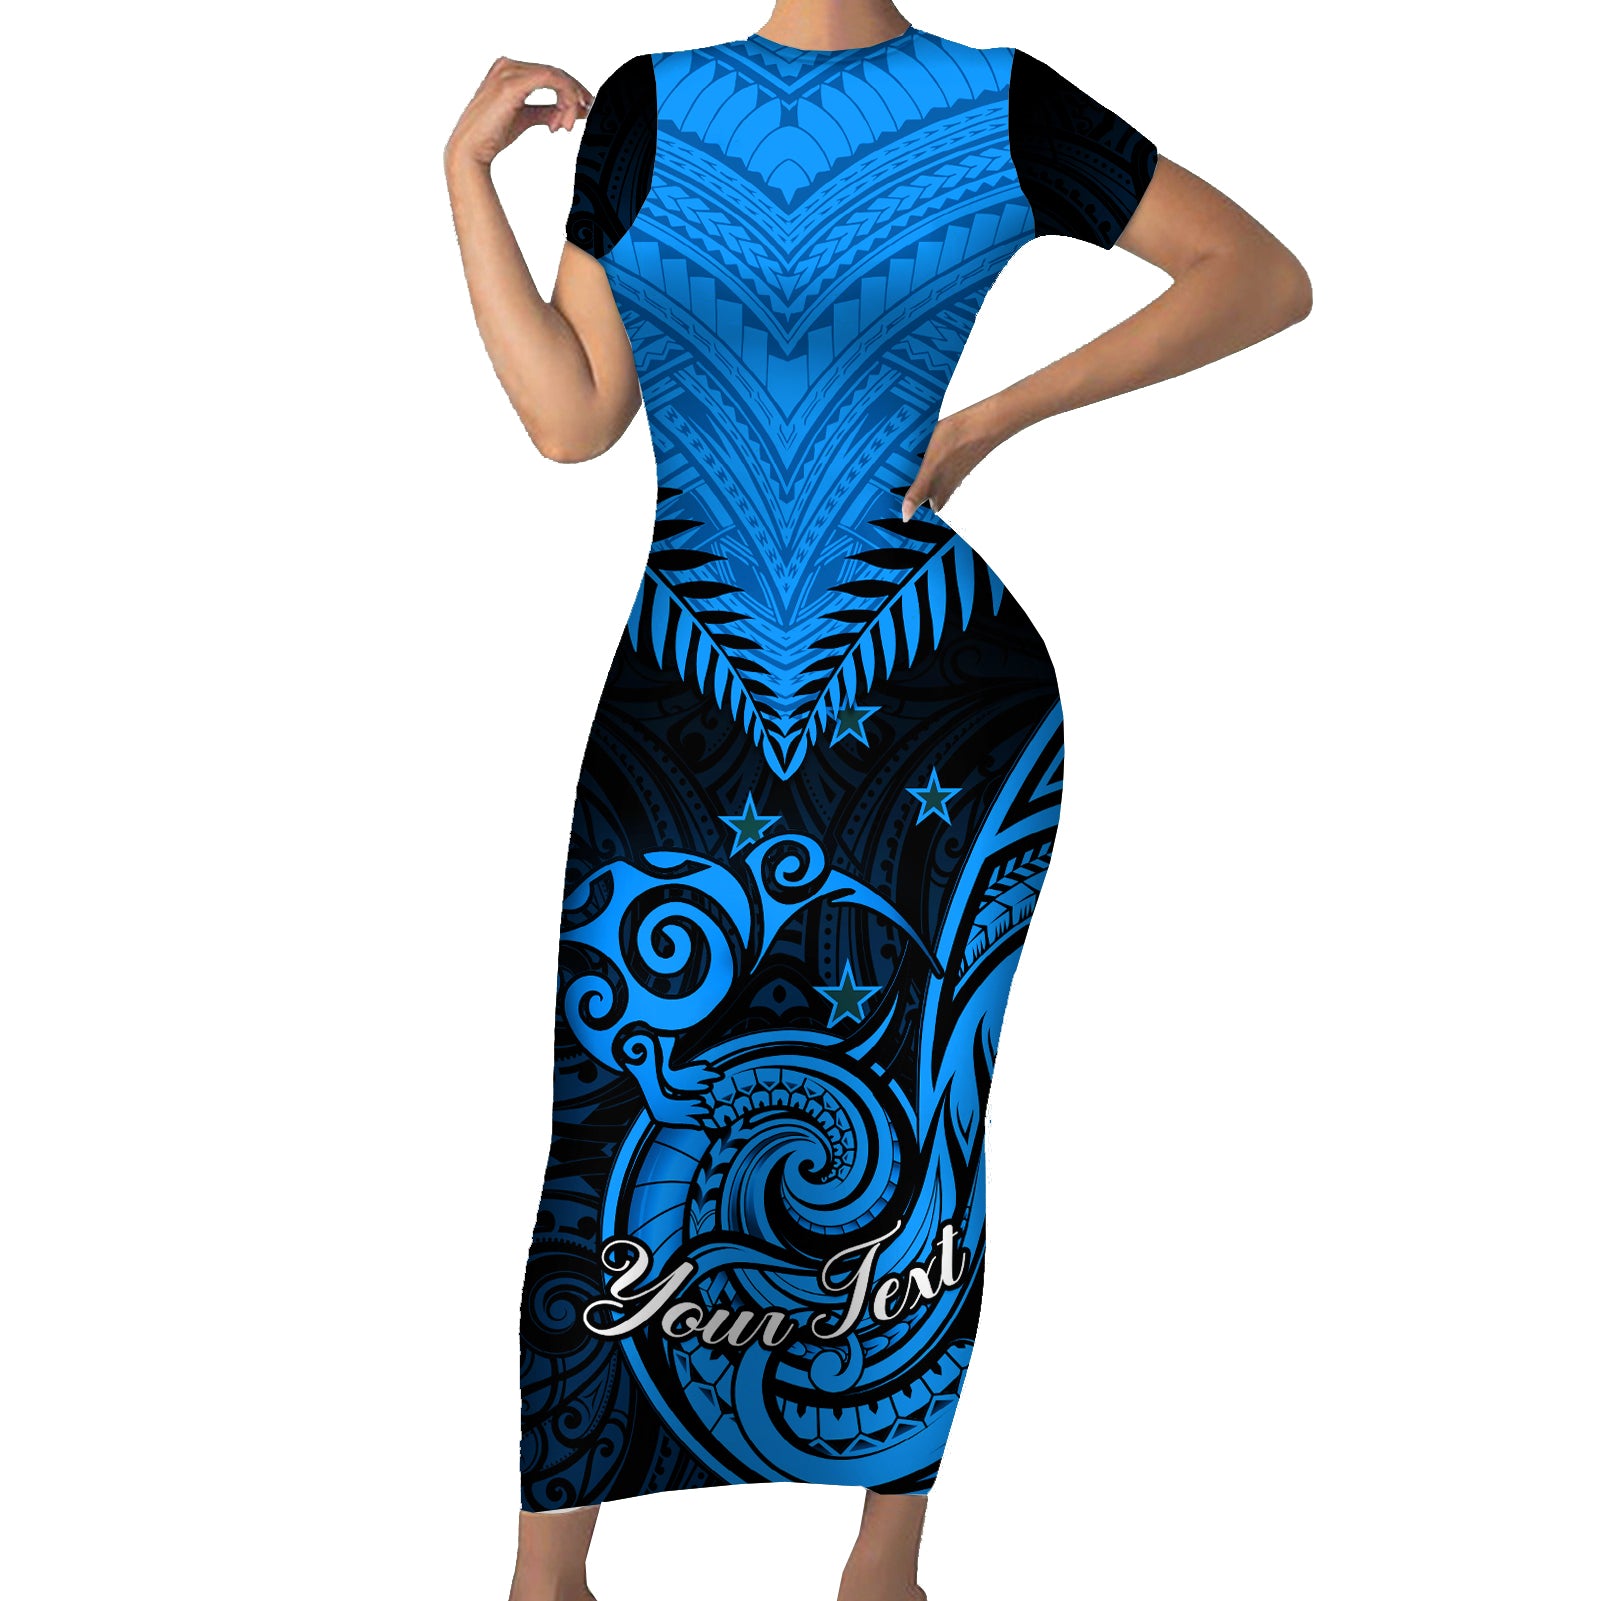 Personalised New Zealand Short Sleeve Bodycon Dress Aotearoa Blue Maori Kiwi Blue Fern LT01 Long Dress Blue - Polynesian Pride